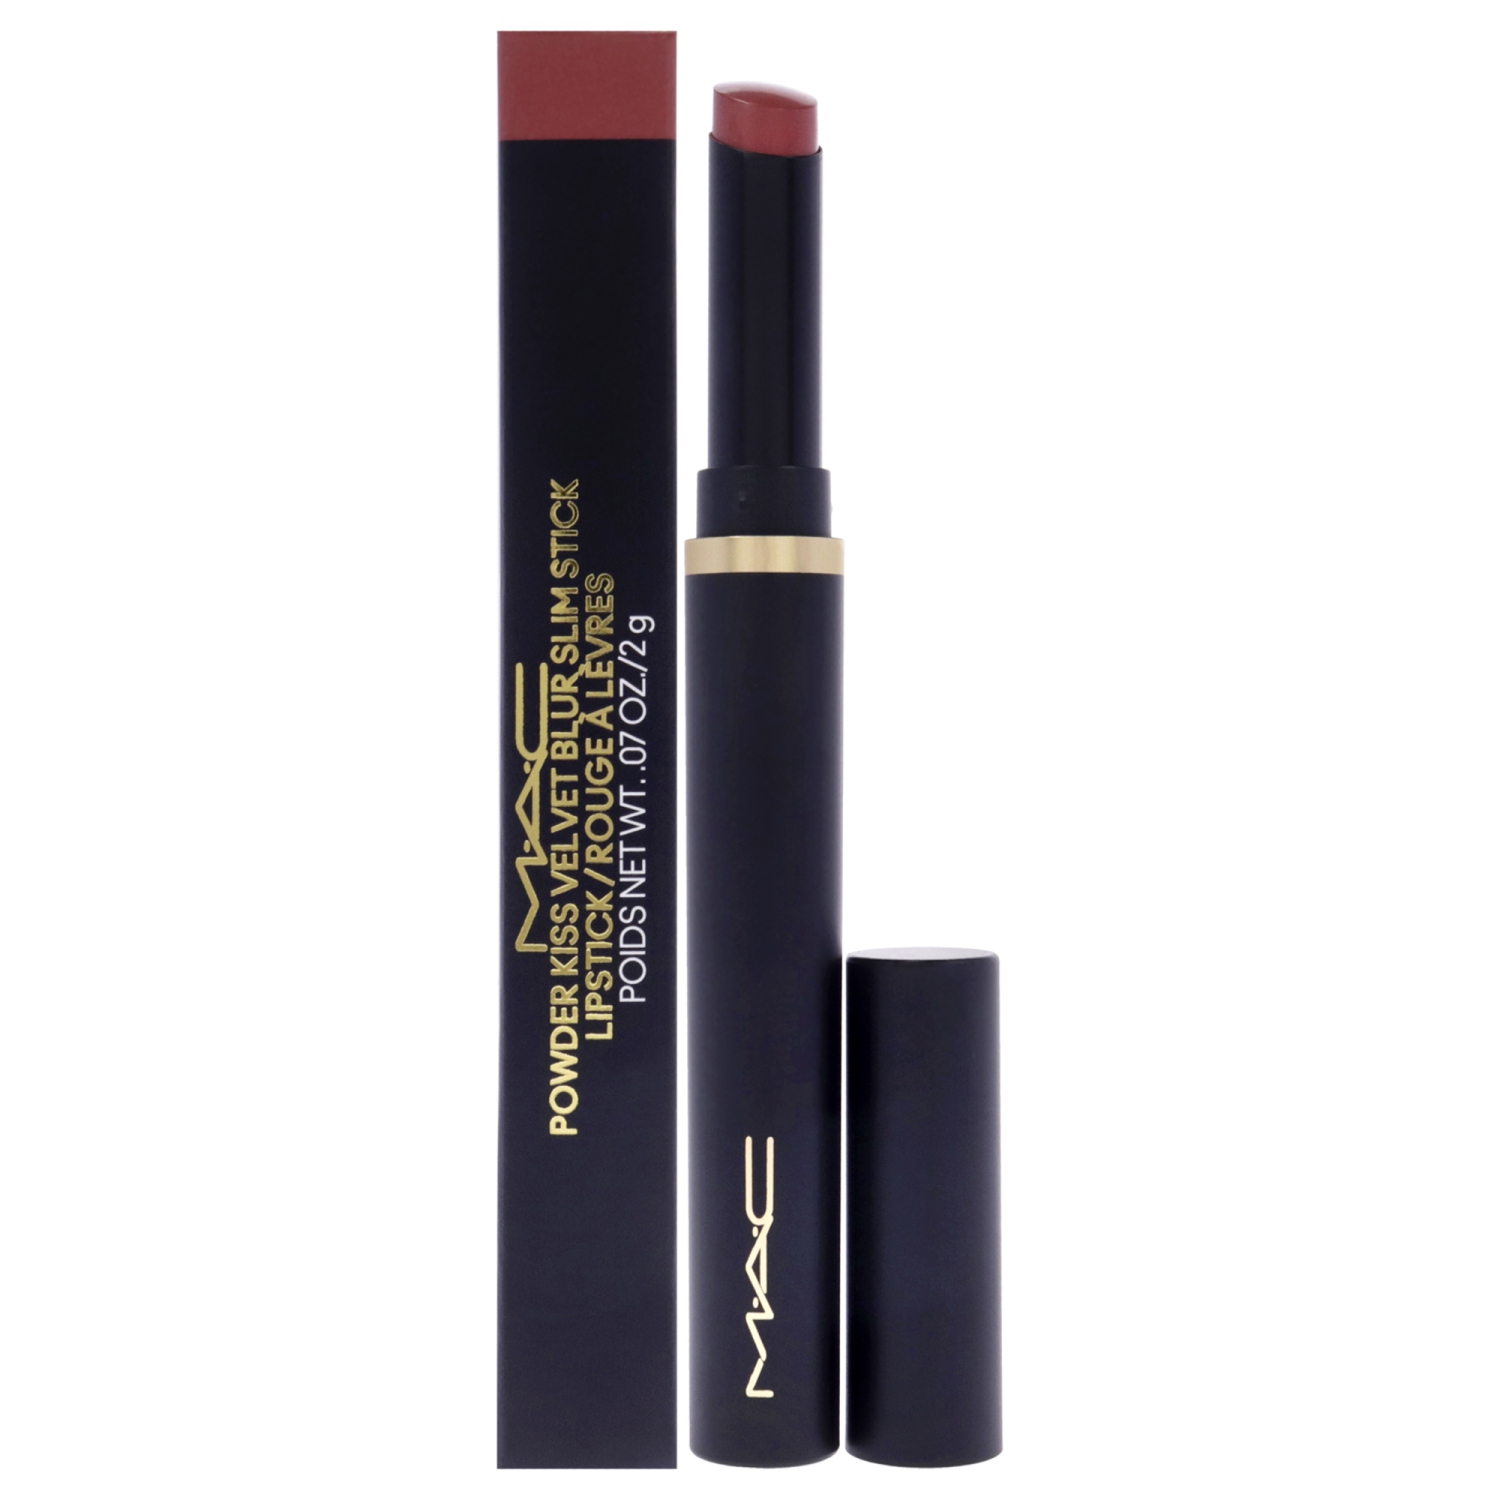 Powder Kiss Velvet Blur Slim Stick - Brickthrough by MAC for Women - 0.7 oz Lipstick